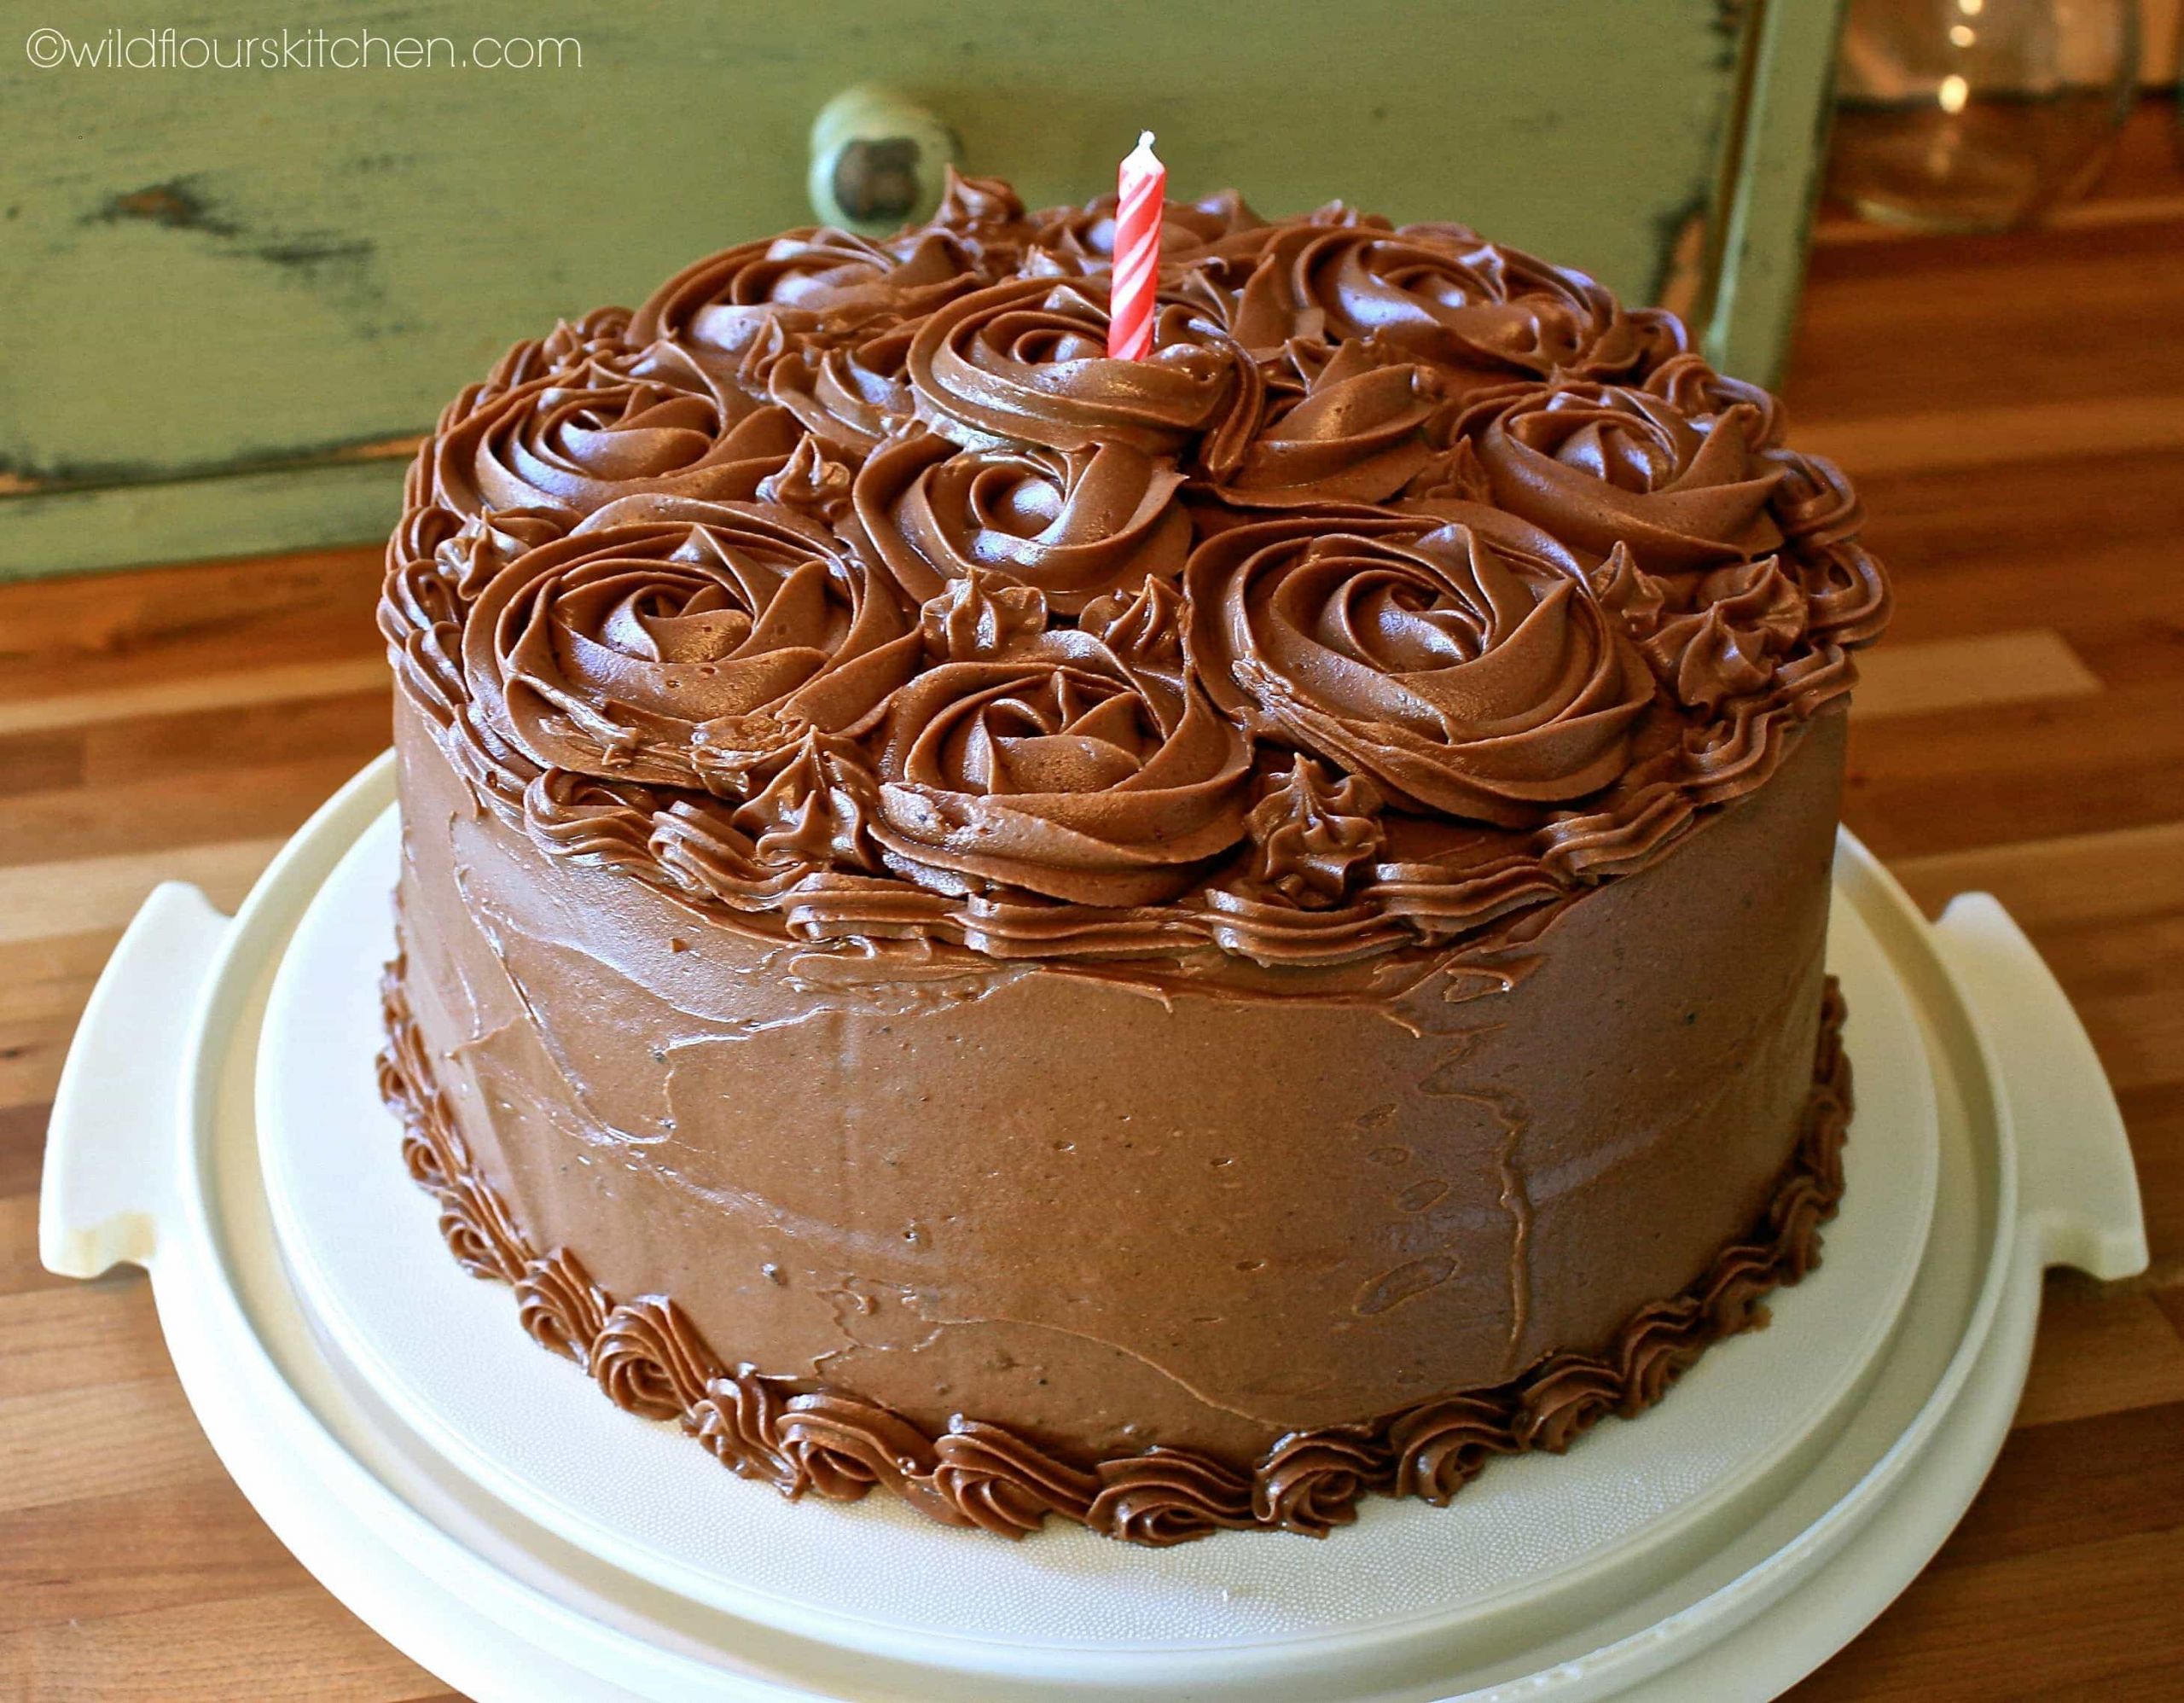 15 Birthday Cake Chocolate
 Anyone Can Make